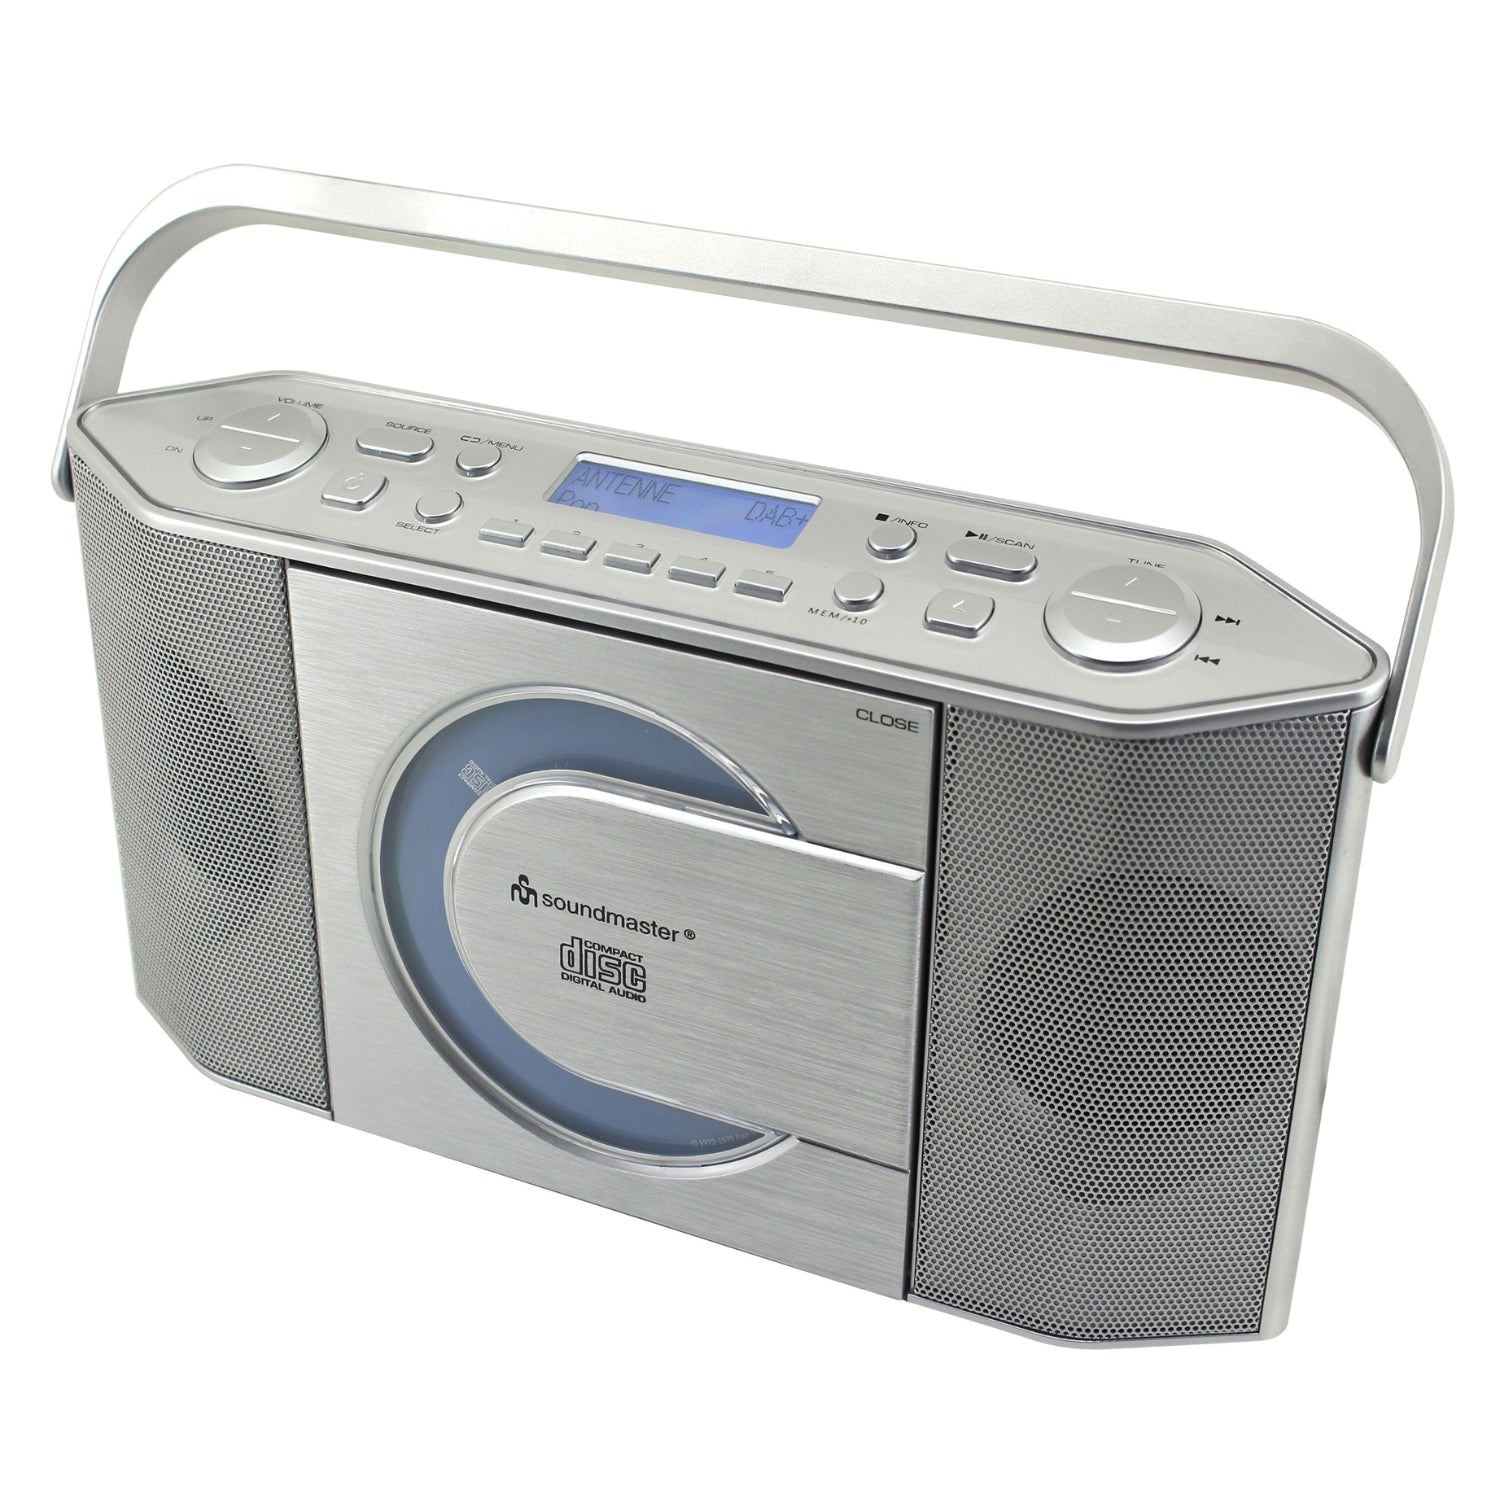 B-ITEM Soundmaster RCD1770SI digital radio radio recorder DAB+ with USB and CD player MP3 headphones clock